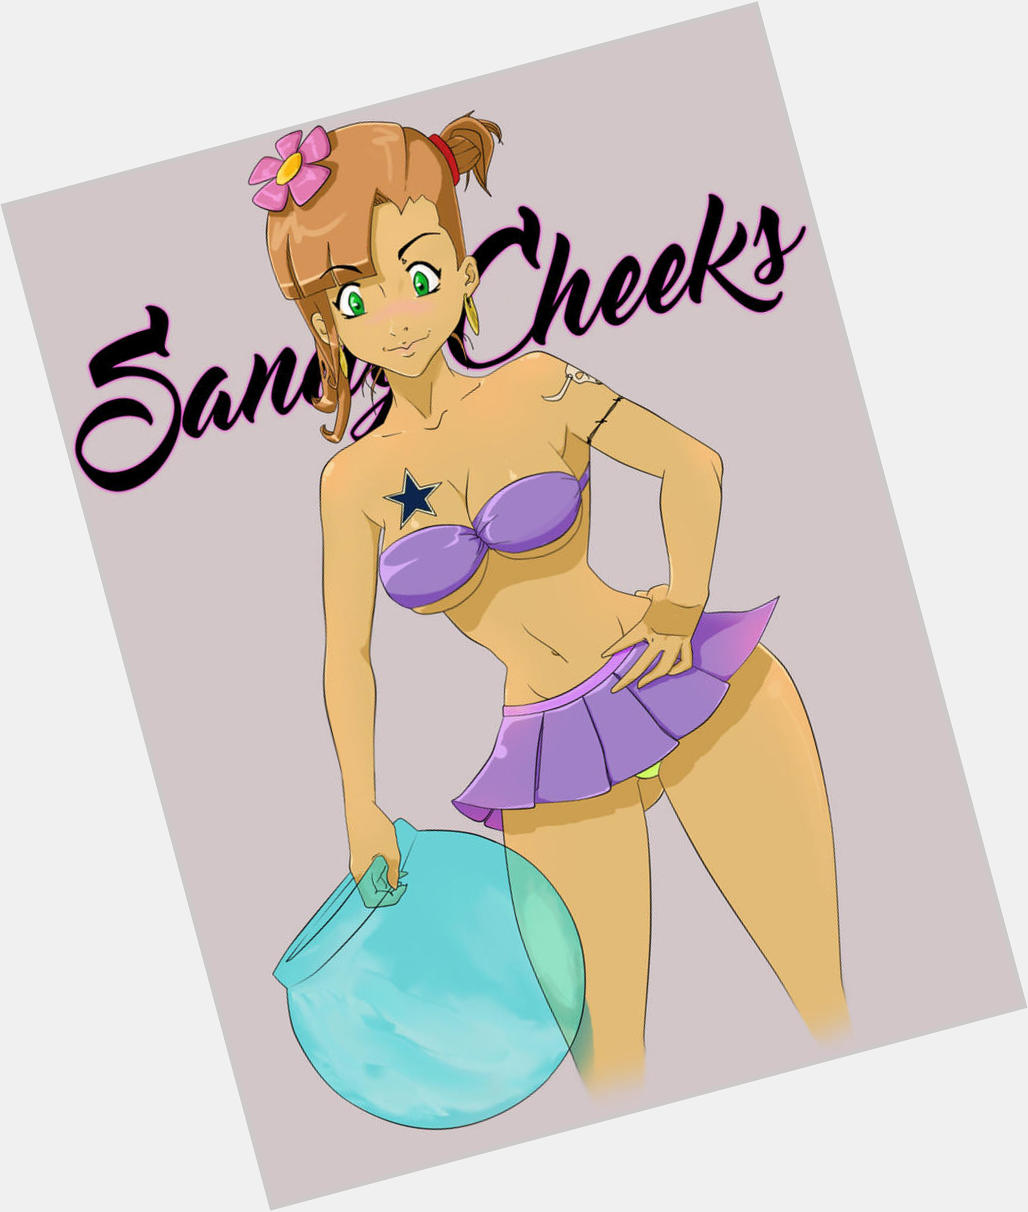 Sandy Cheeks.